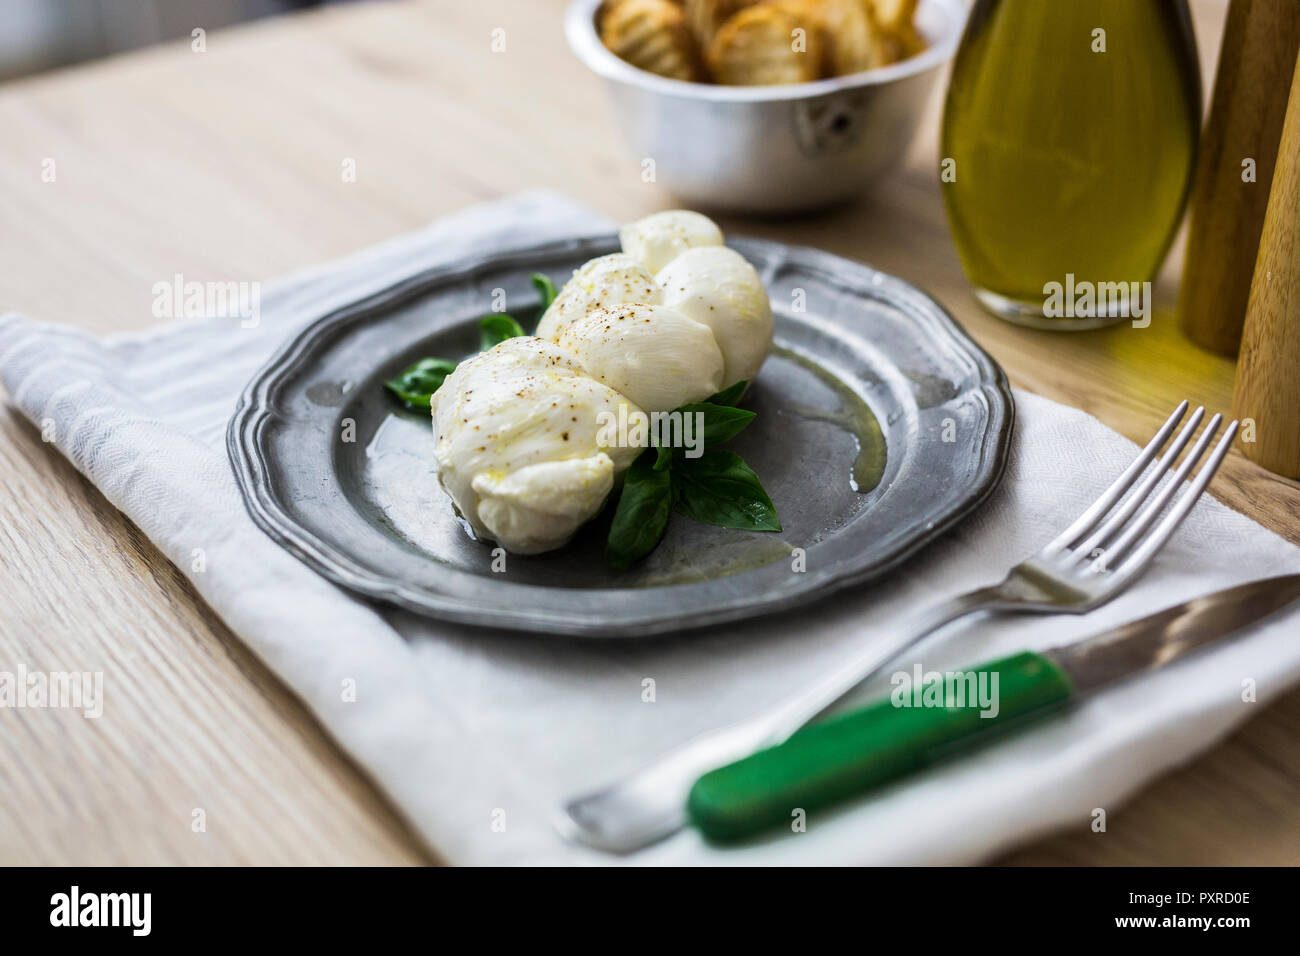 Mozzarella braid and basil on plate Stock Photo